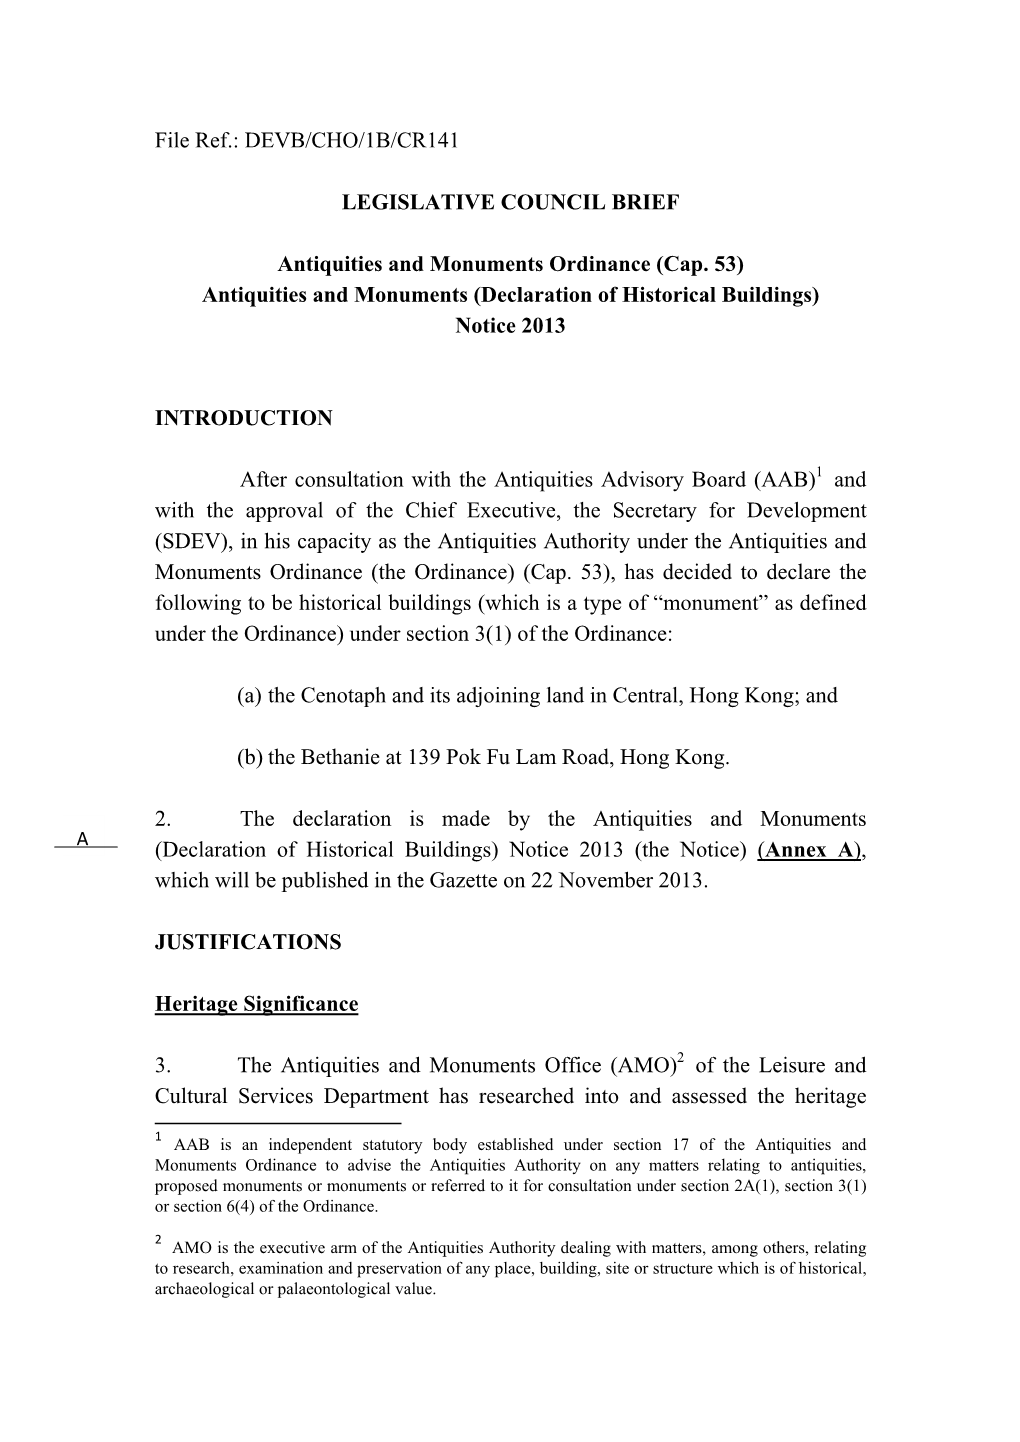 LEGISLATIVE COUNCIL BRIEF File Ref.: DEVB/CHO/1B/CR141